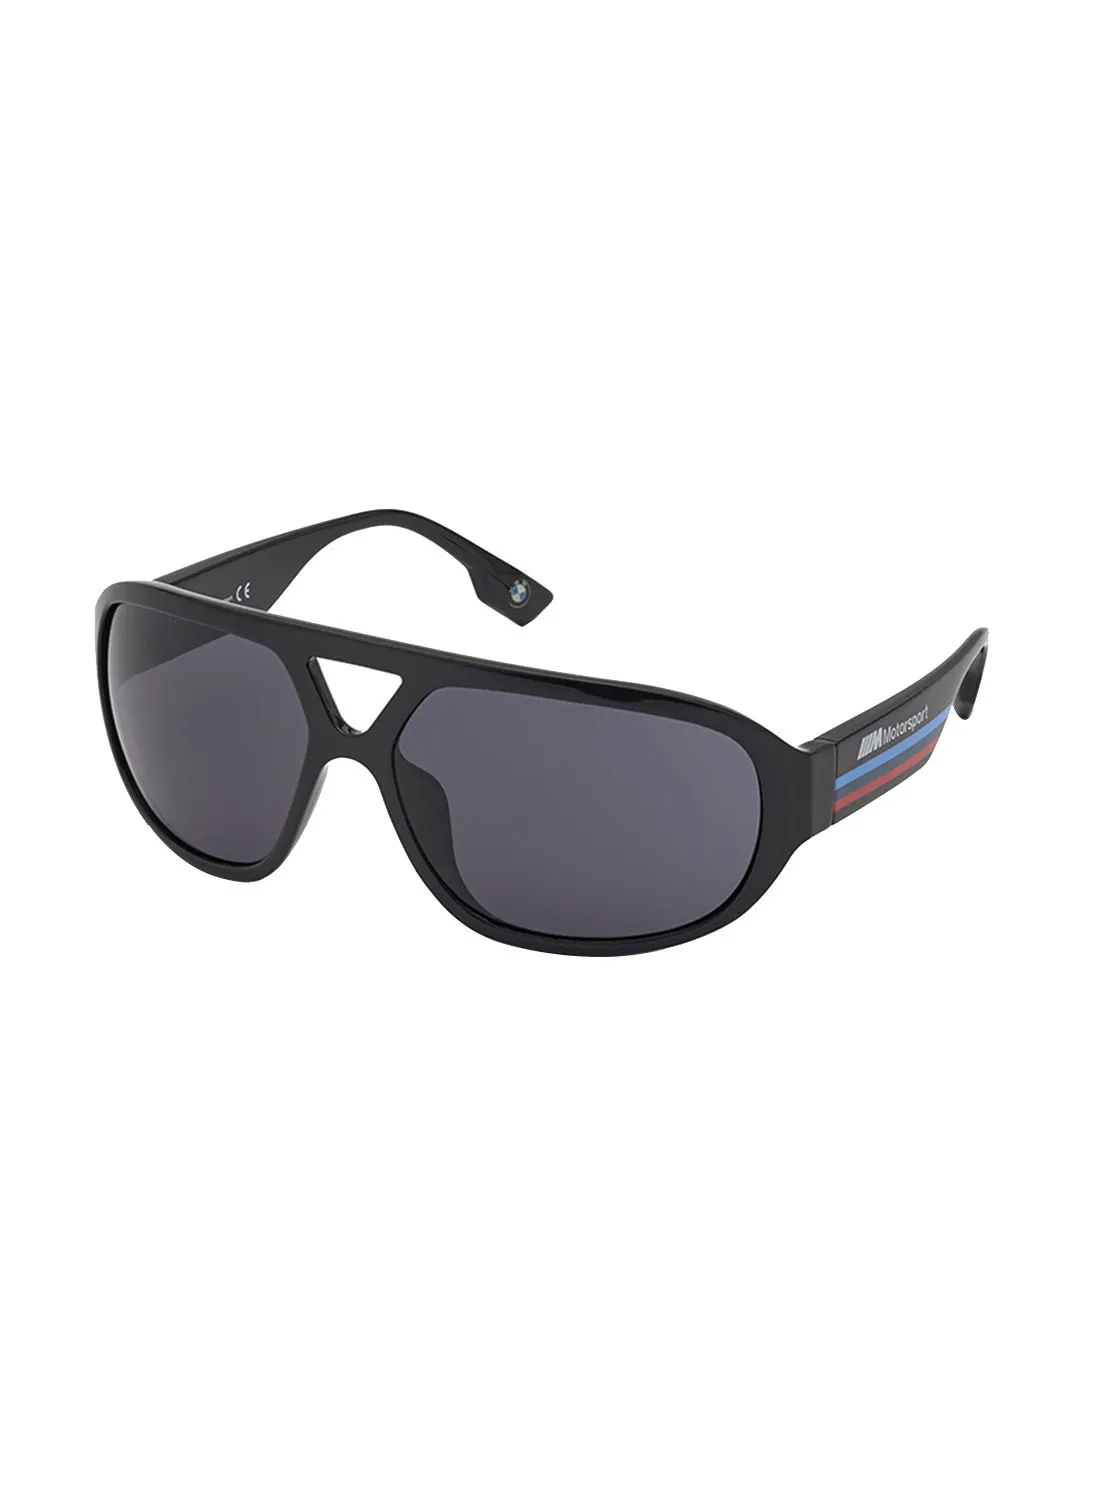 BMW Men's Sunglasses BS000901A64